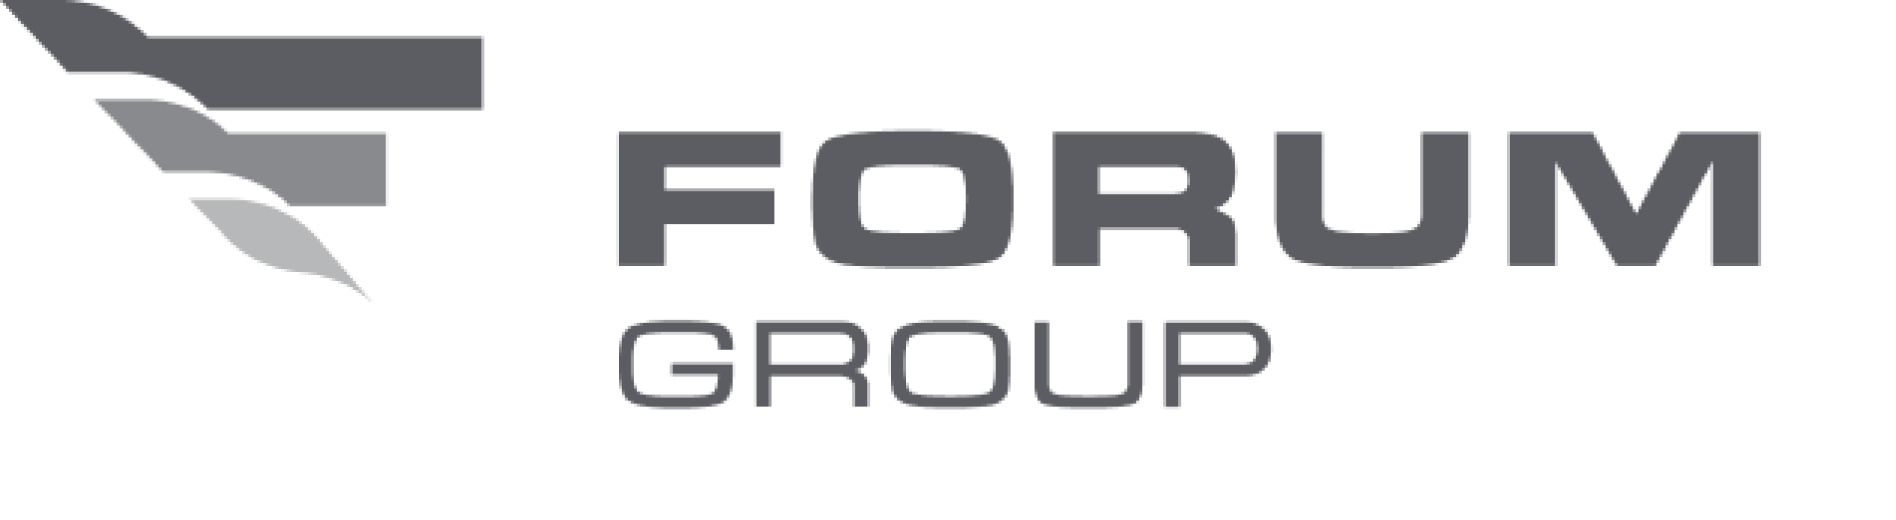 Forum Group